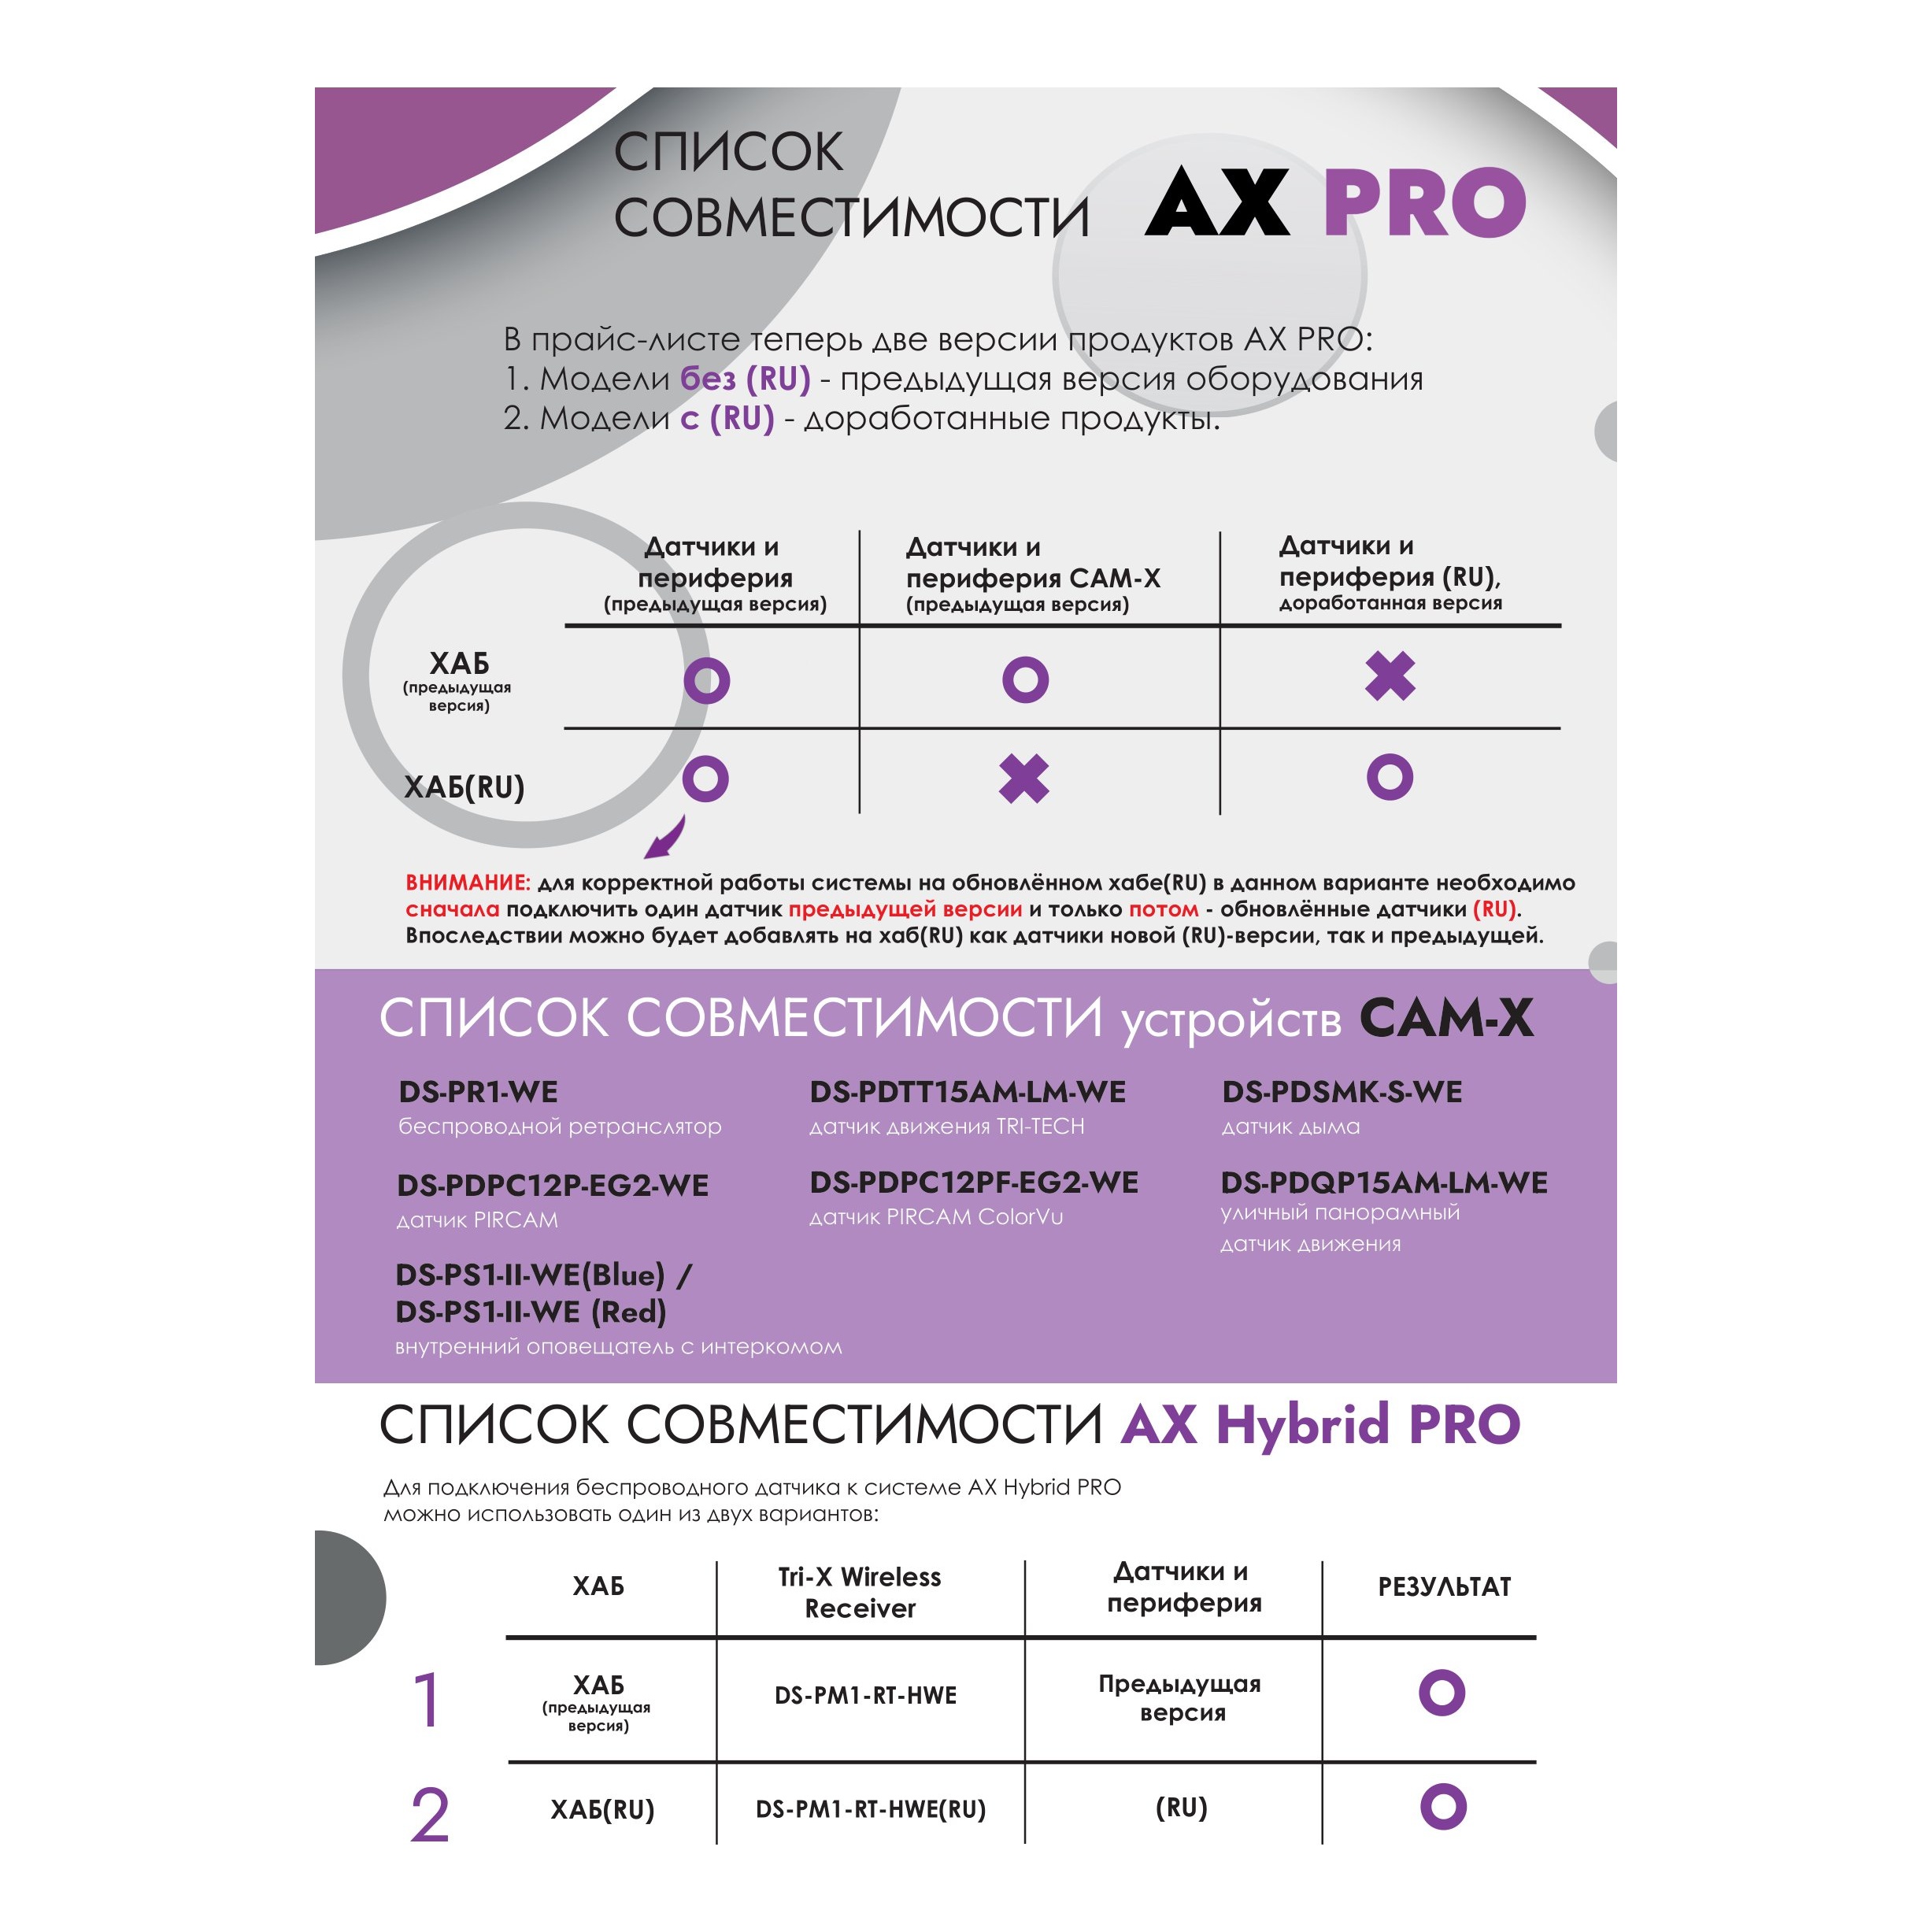 Hikvision AX PRO DS-PK1-LRT-HWE Проводная клавиатура c LСD индикатором (AX Hybrid Pro)